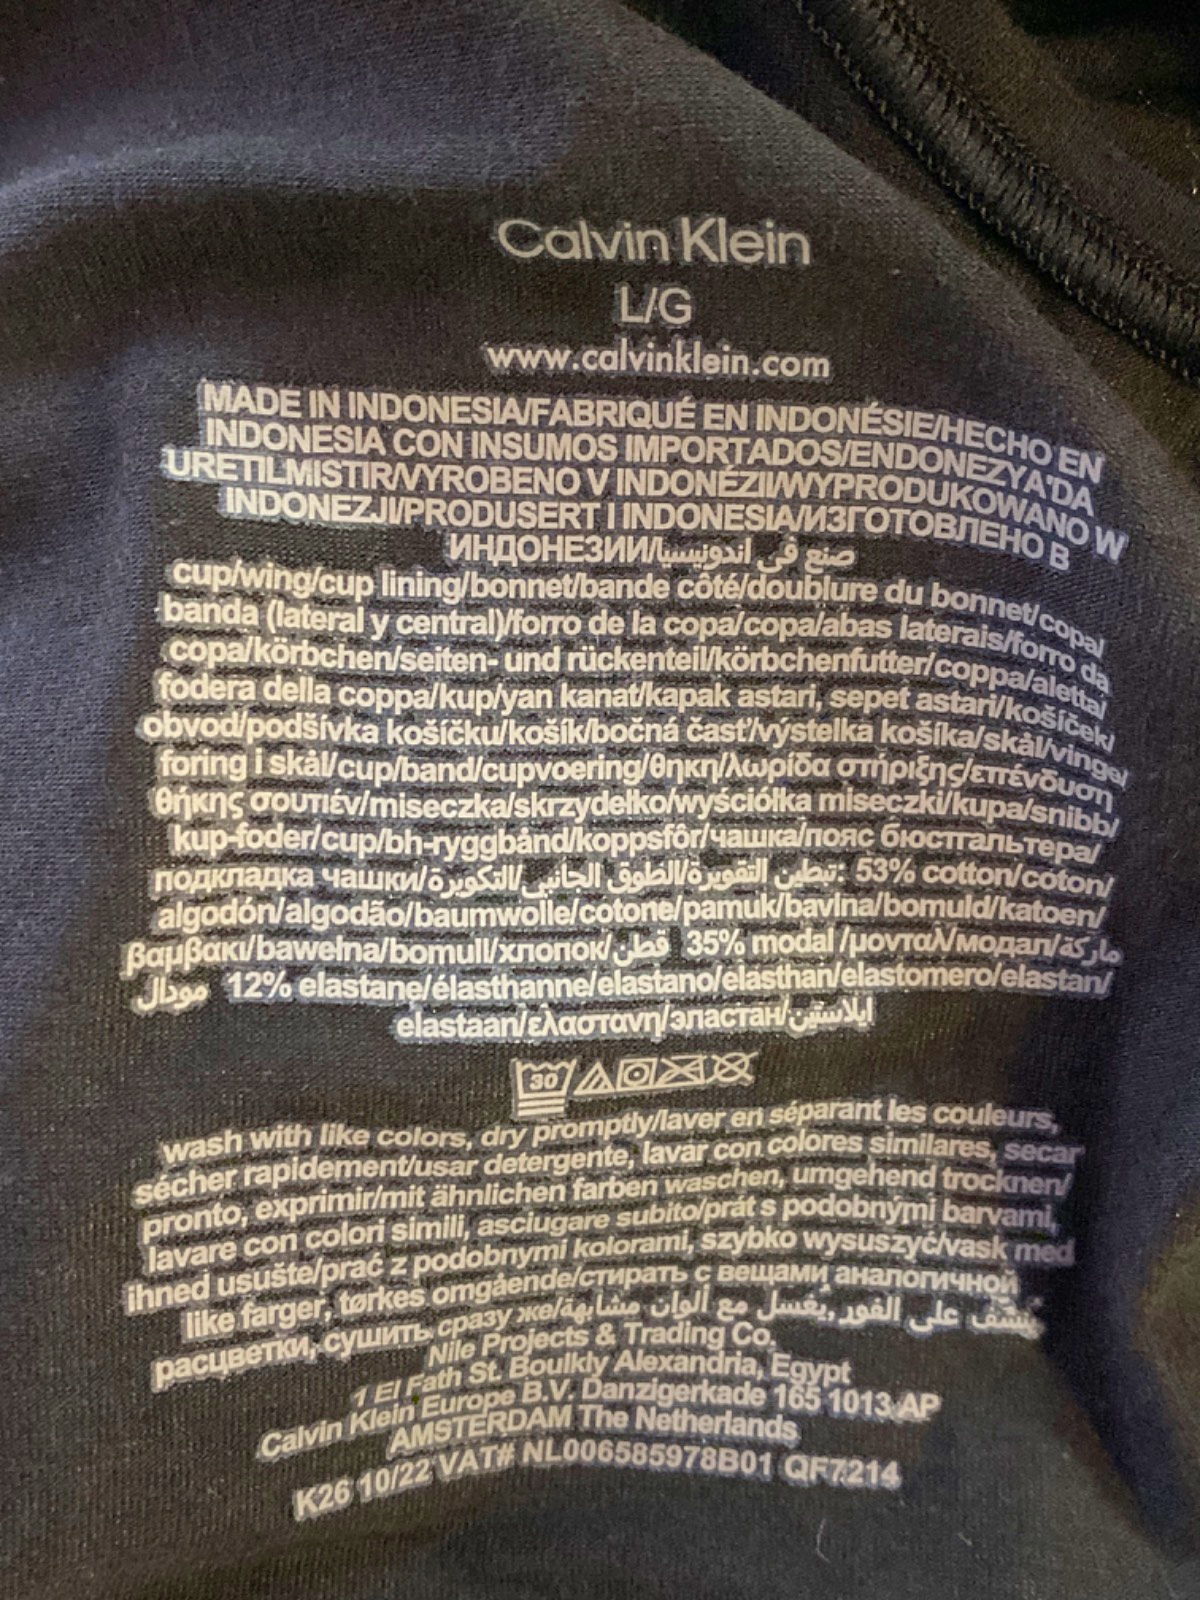 Calvin Klein Black Modern Cotton Unlined Bralette L